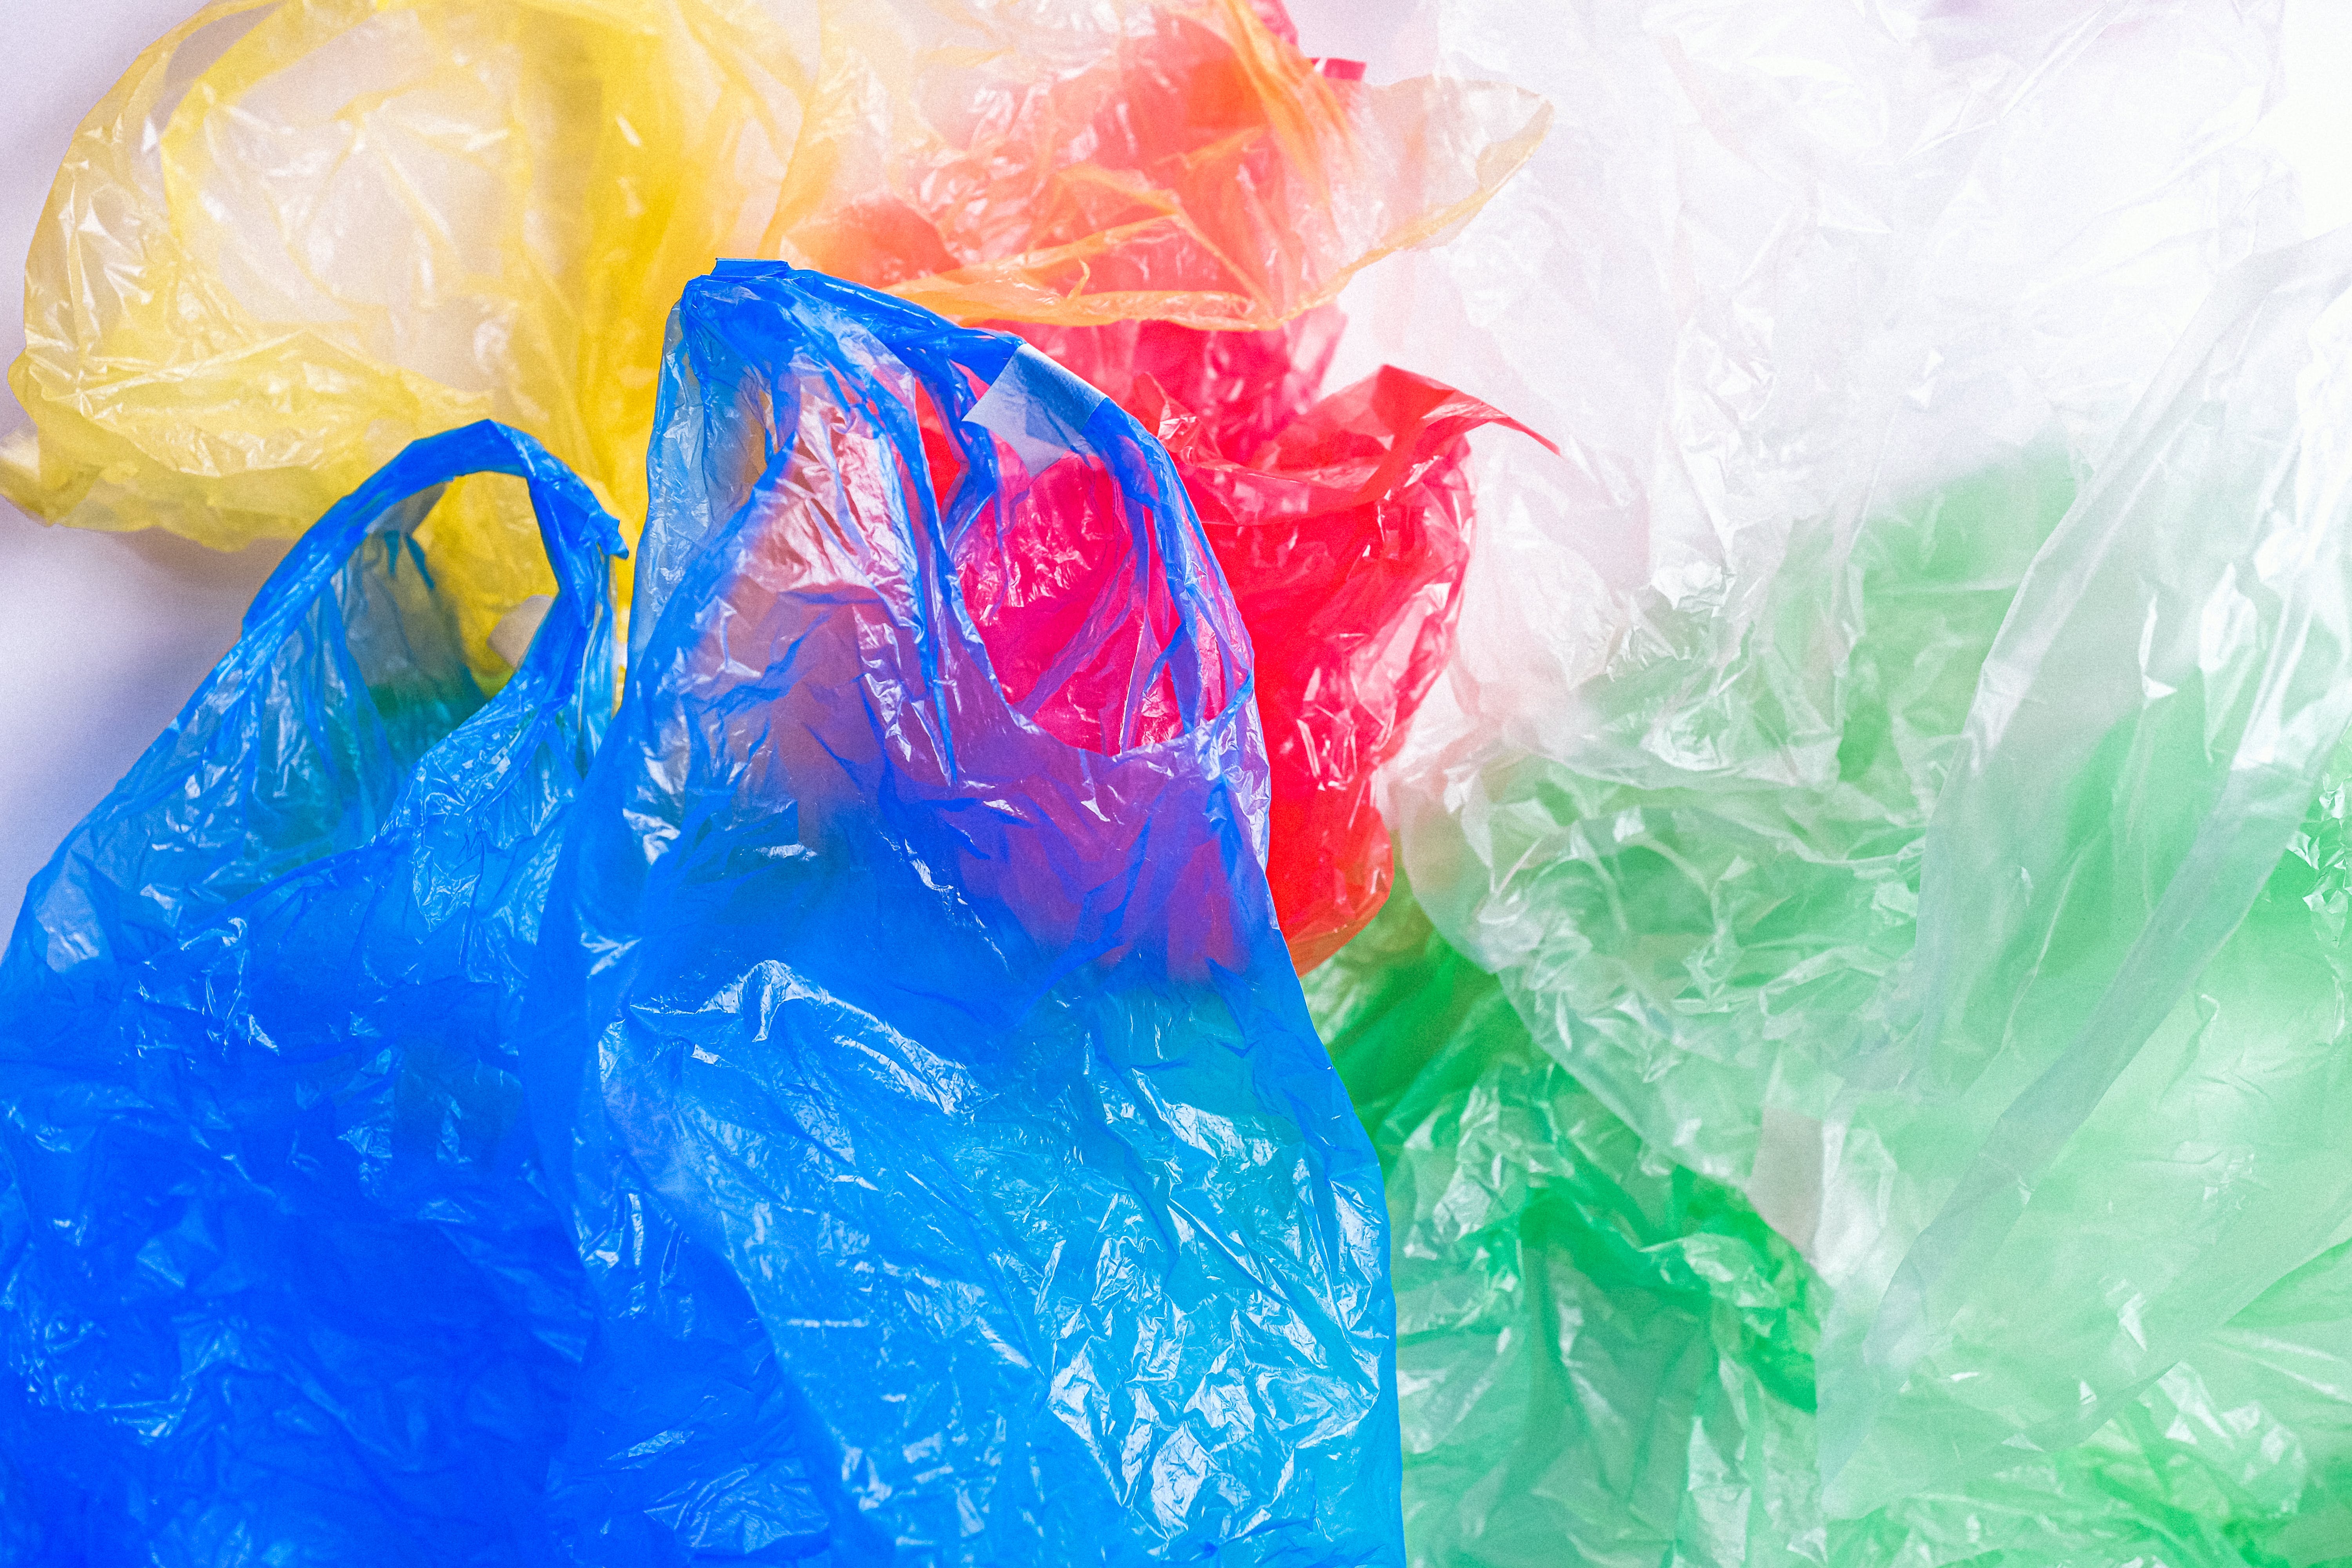 Still throwing away plastic bags Smart ways to repurpose them